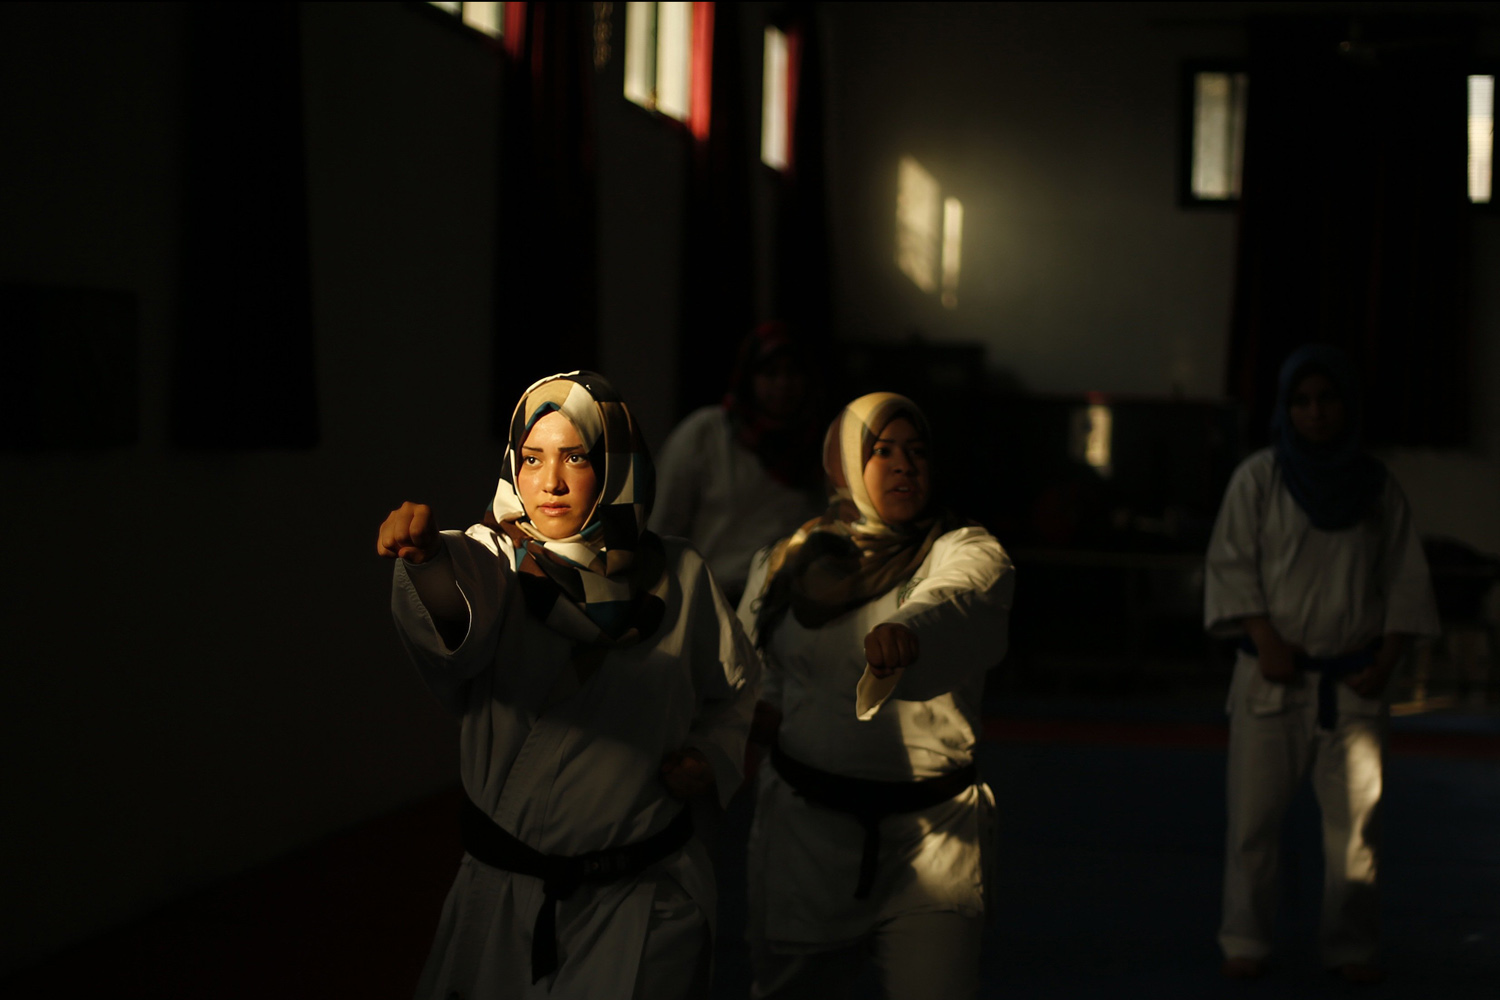 Palestinian girls take part in a karate class at al-Reyadi club in Gaza City